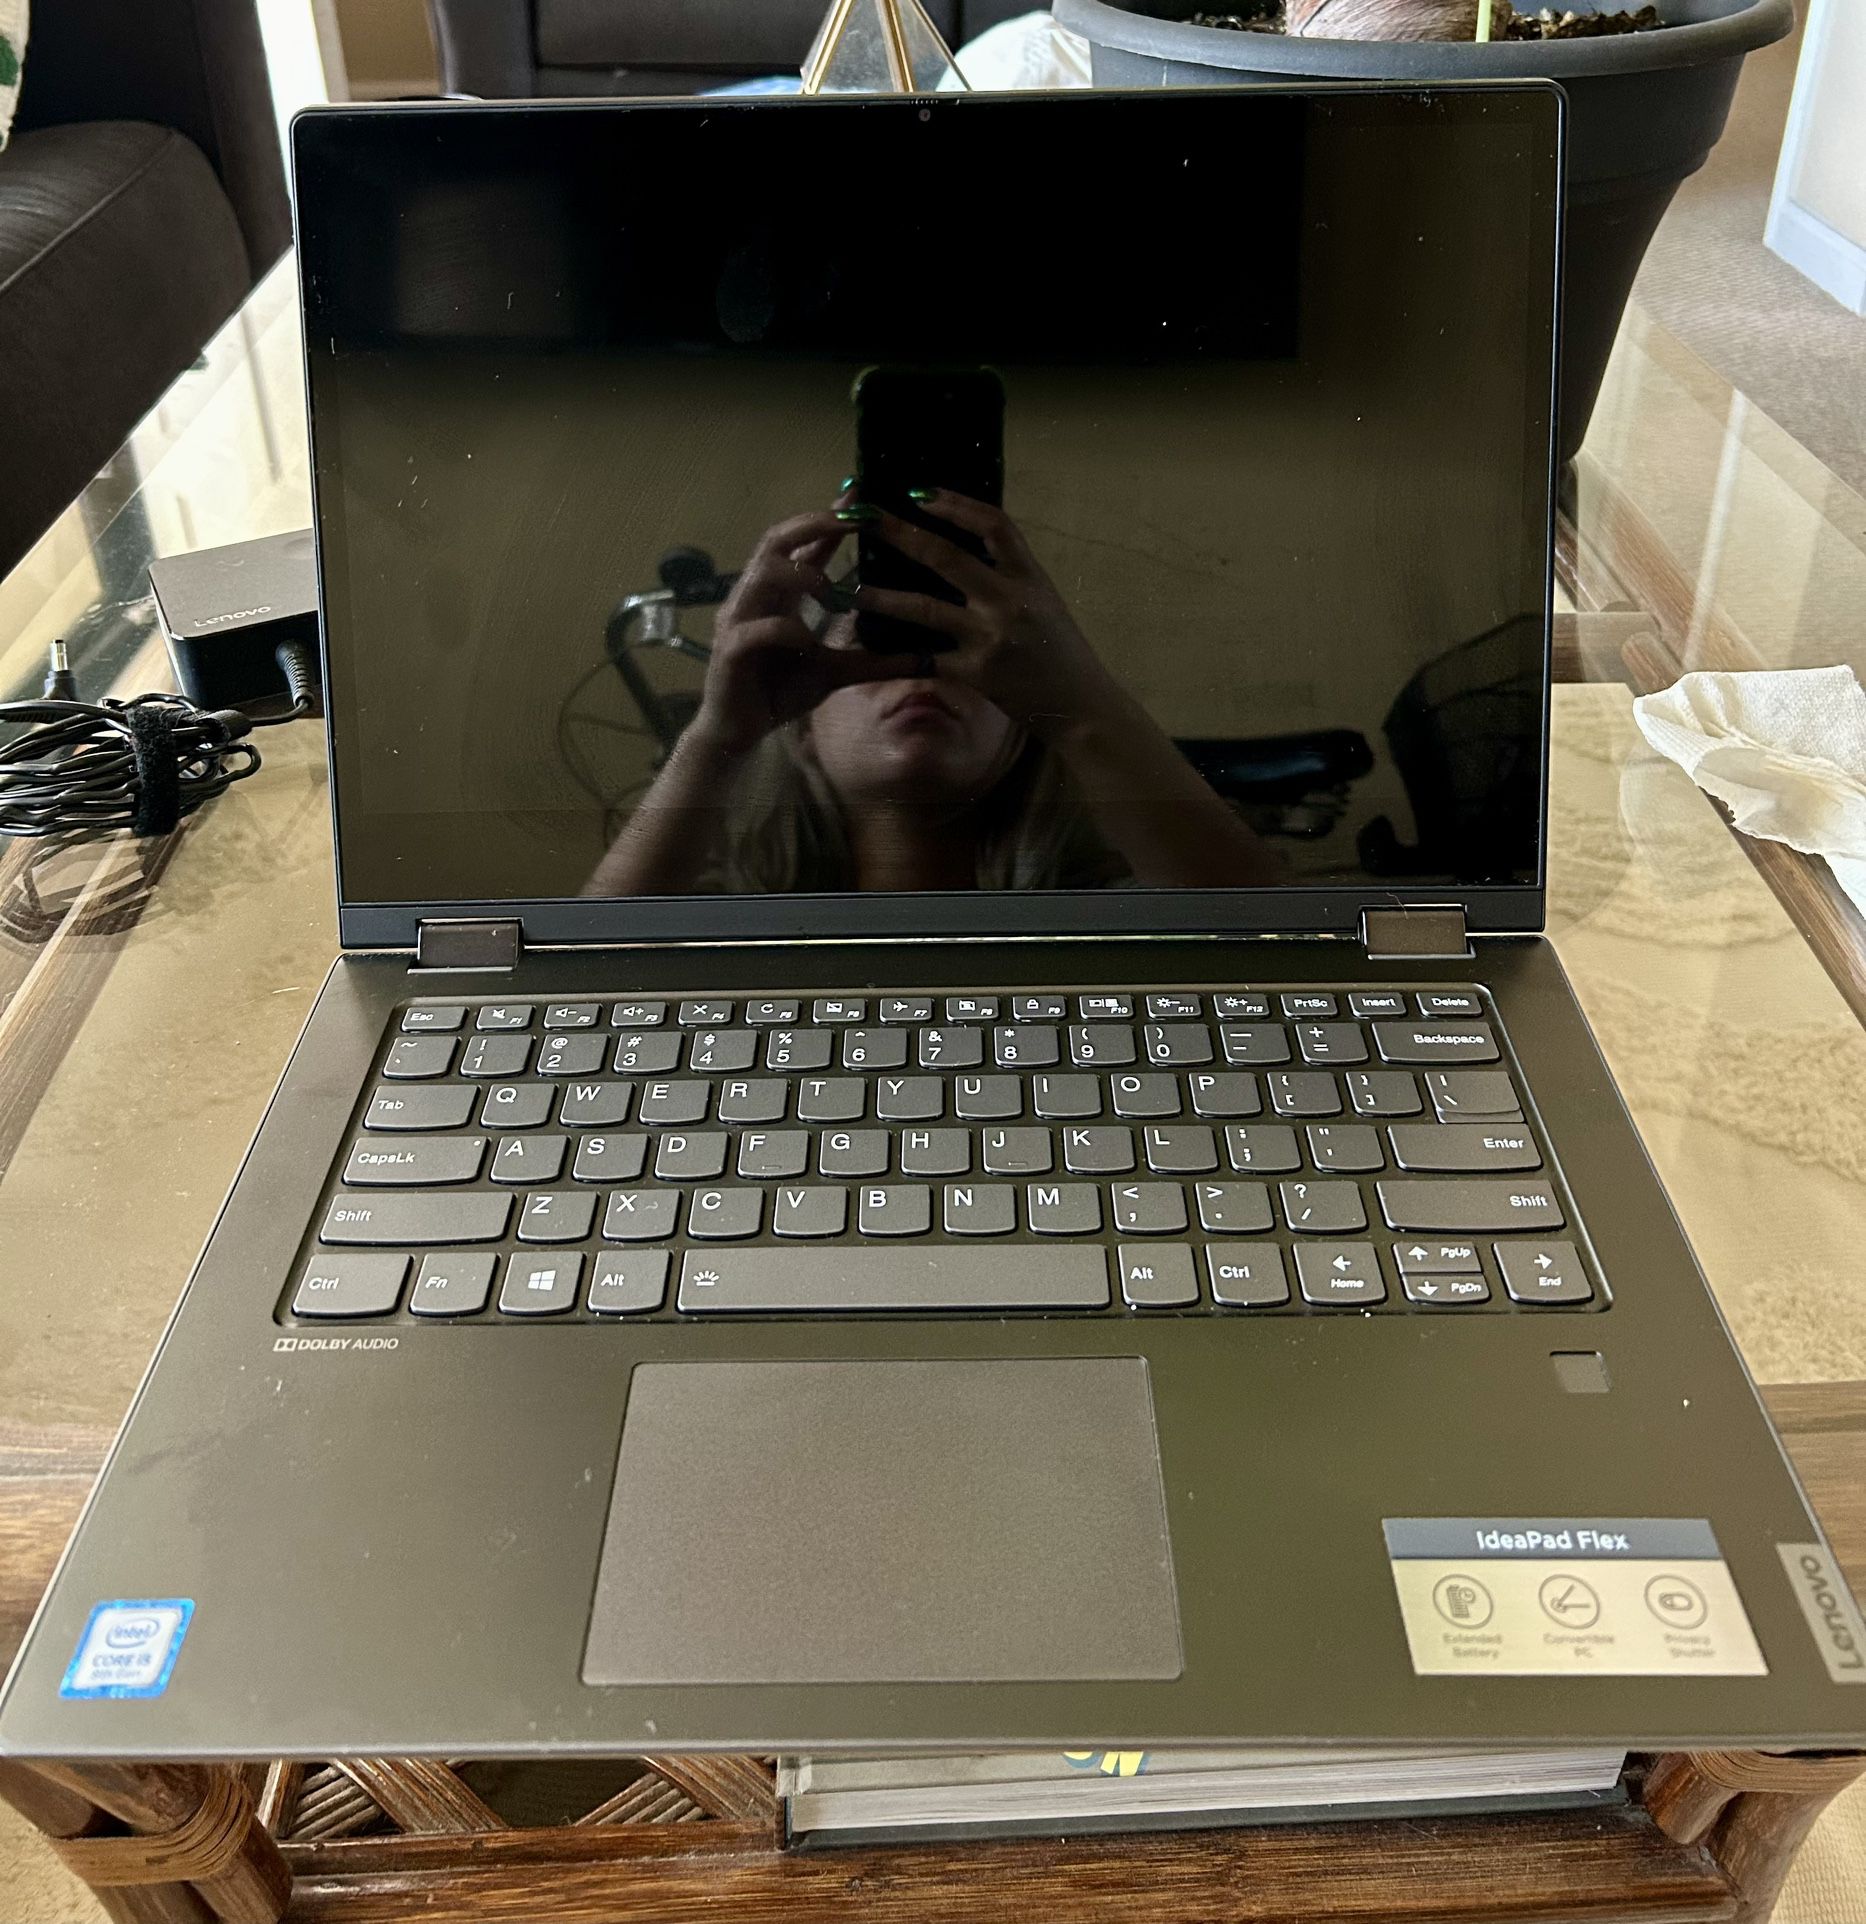 Laptop -Lenovo Idea Pad Flex 141WL